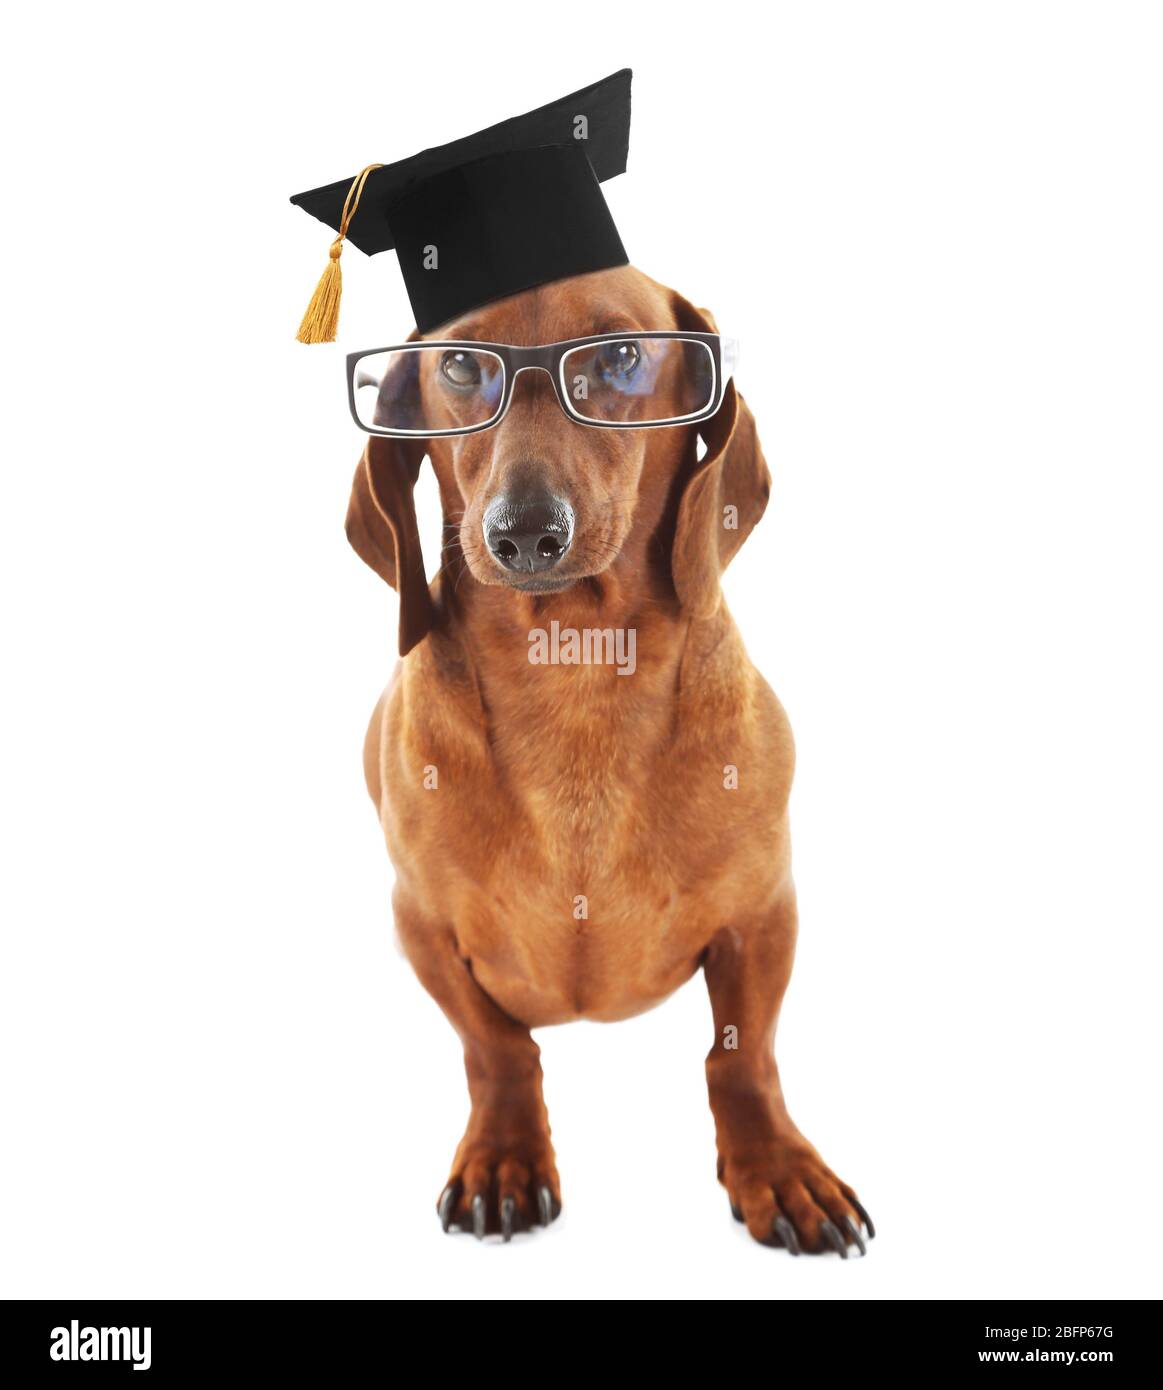 Gund Graduation Dog with Black Cap New 